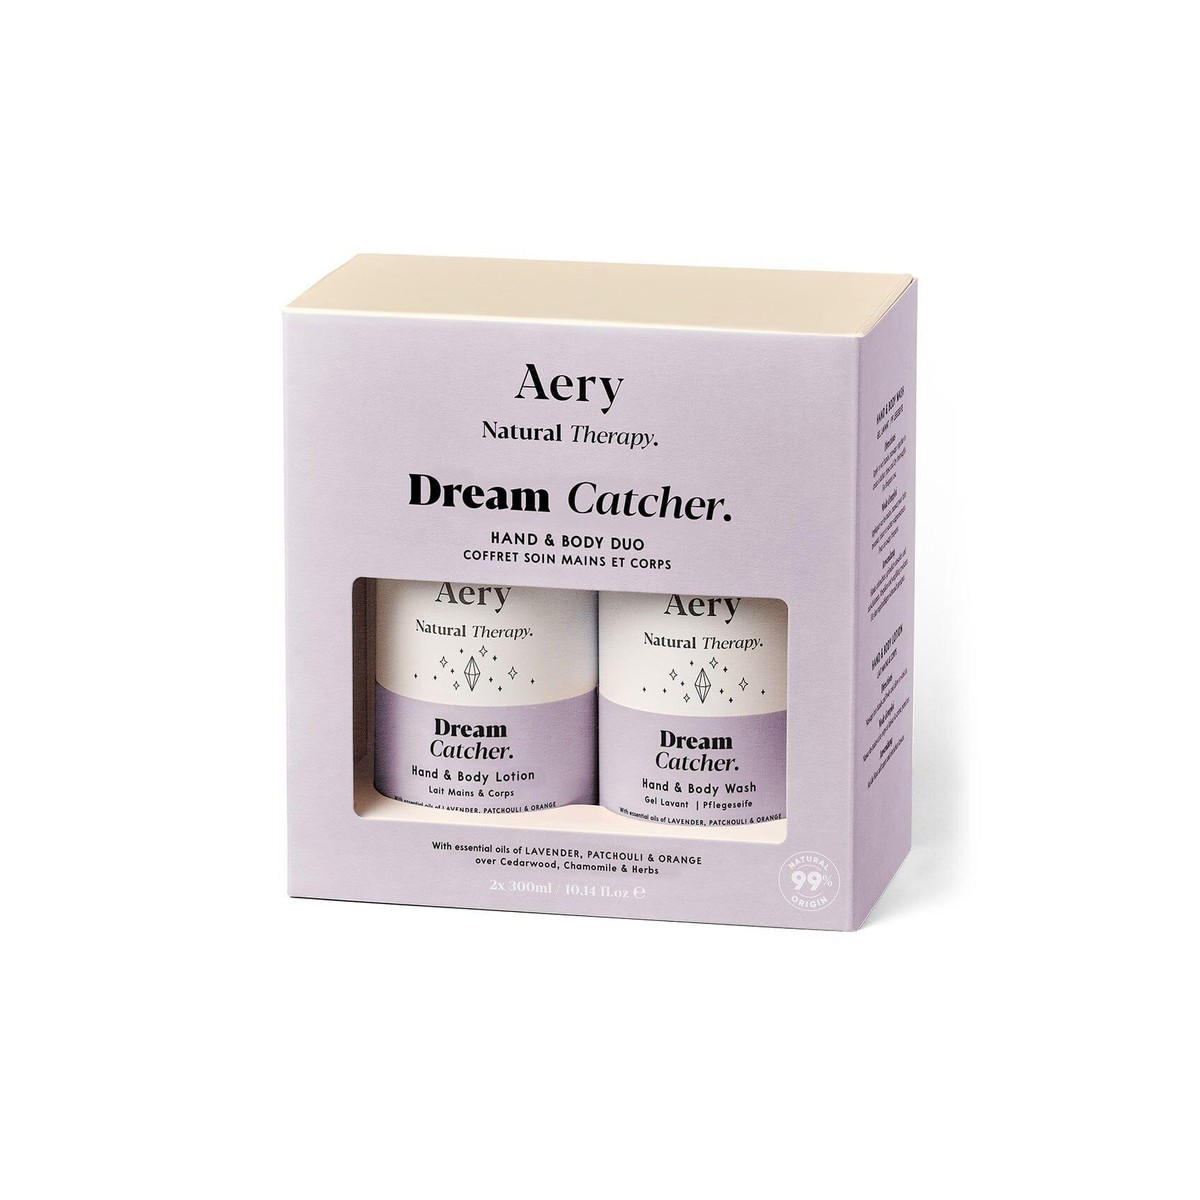  Aromatherapy Duo Savon & Crème Mains/Corps Dream Catcher  2x 300ml